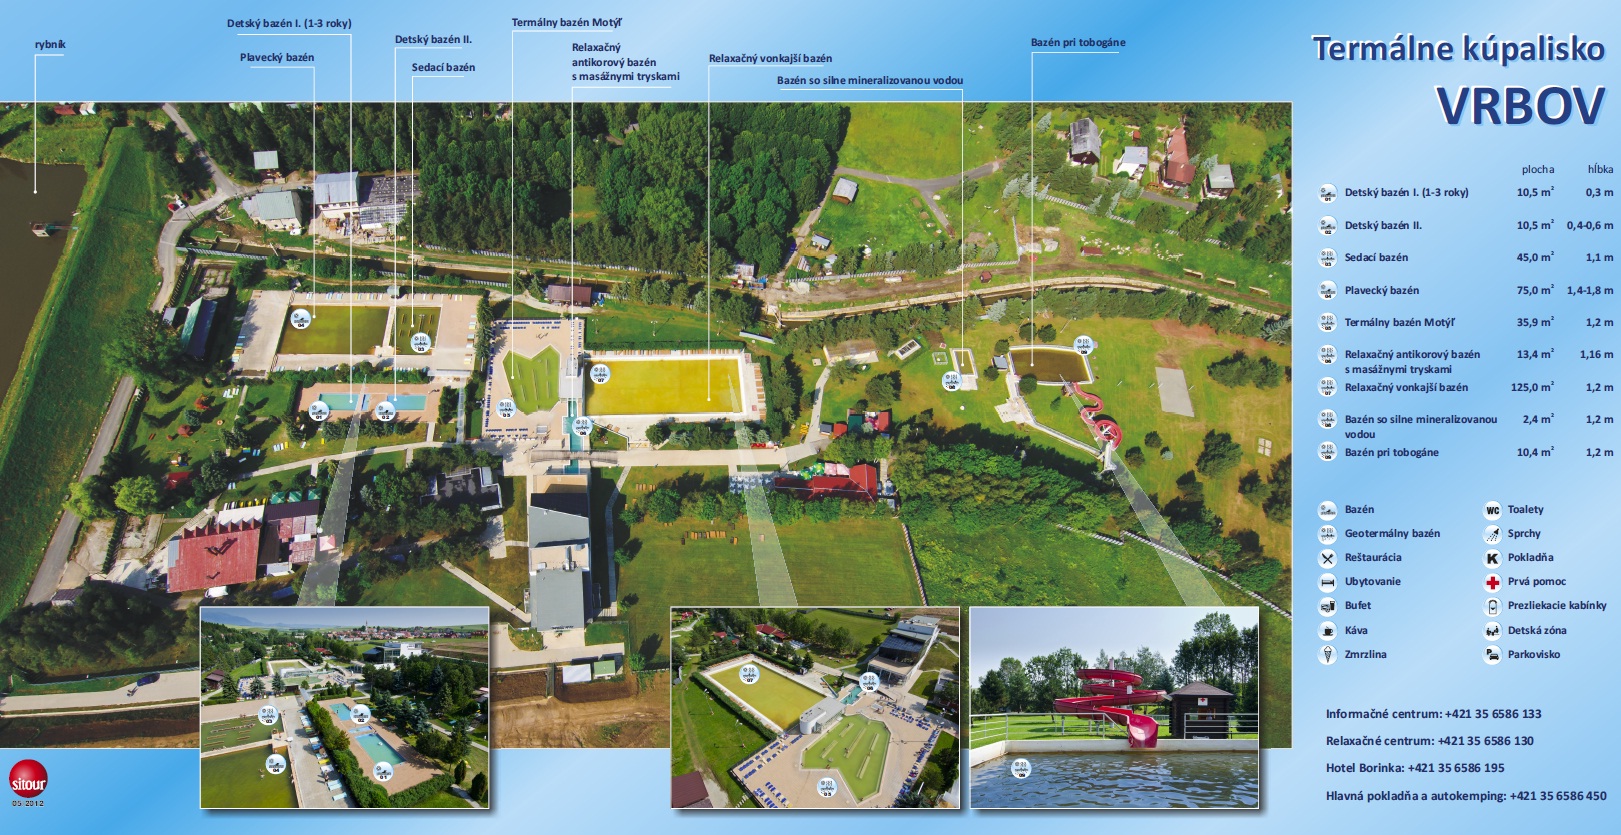 Map - Thermal park Vrbov